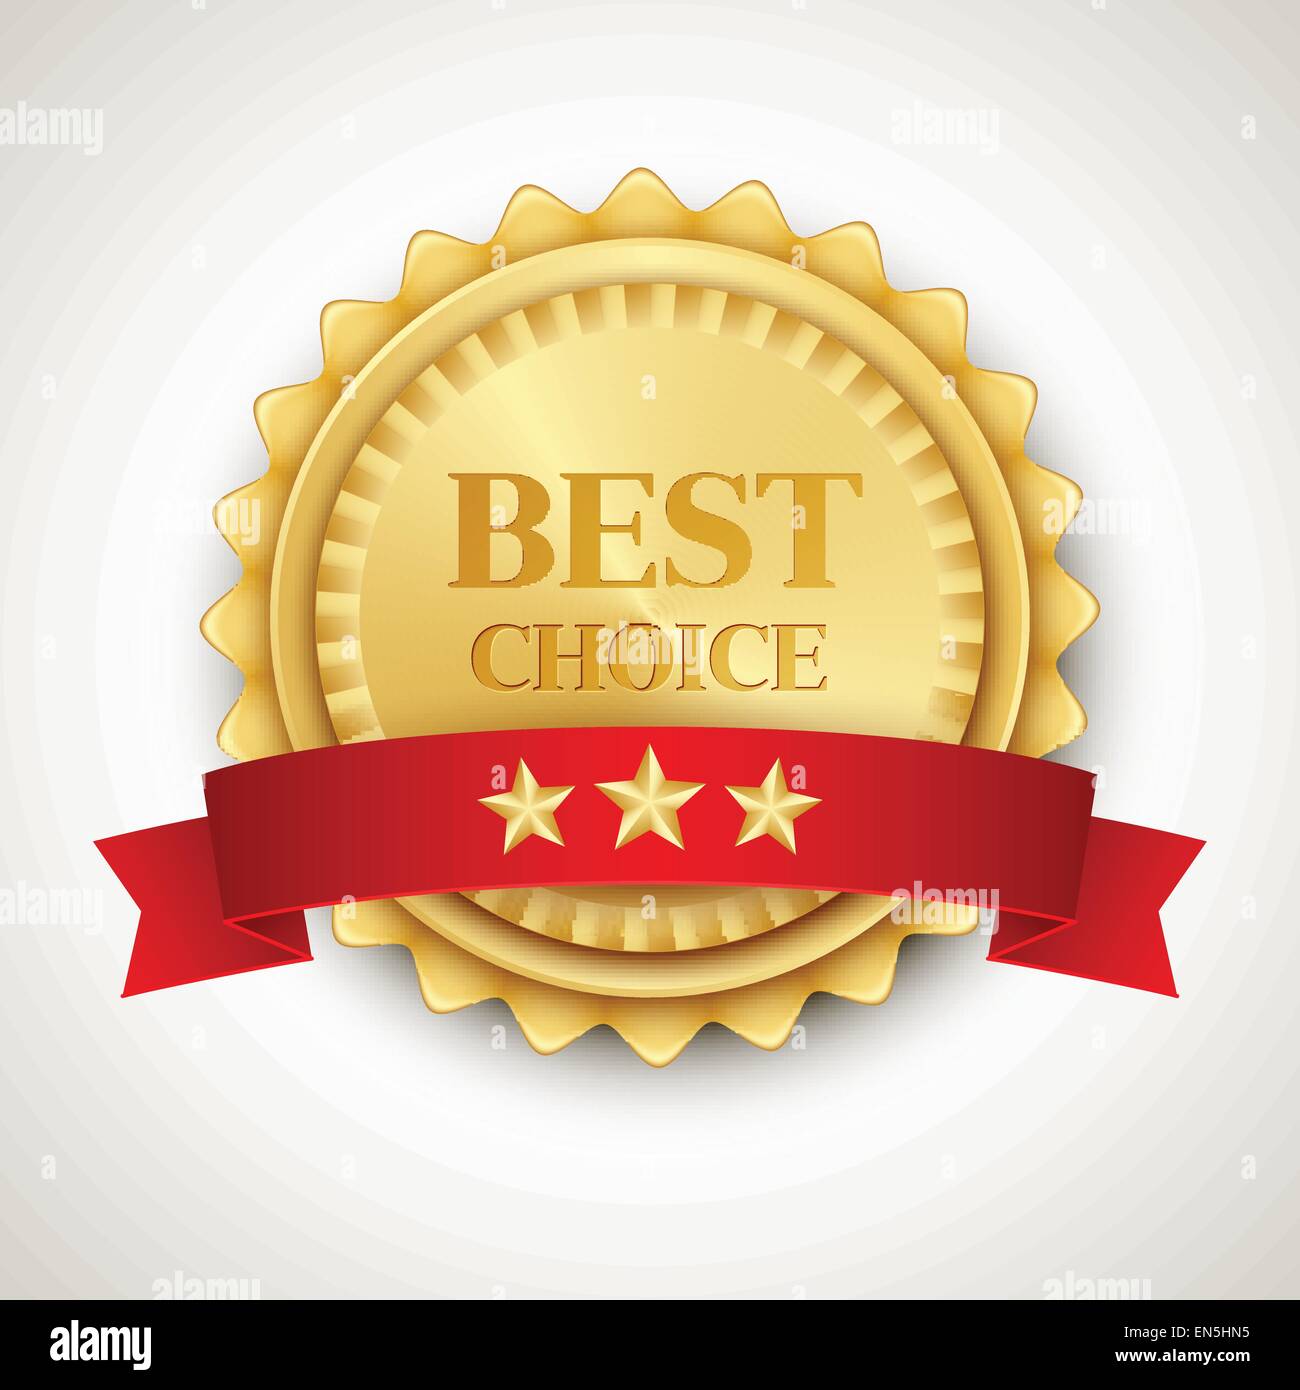 Best choice icon badge Vector illustration EPS 10 Stock Vector